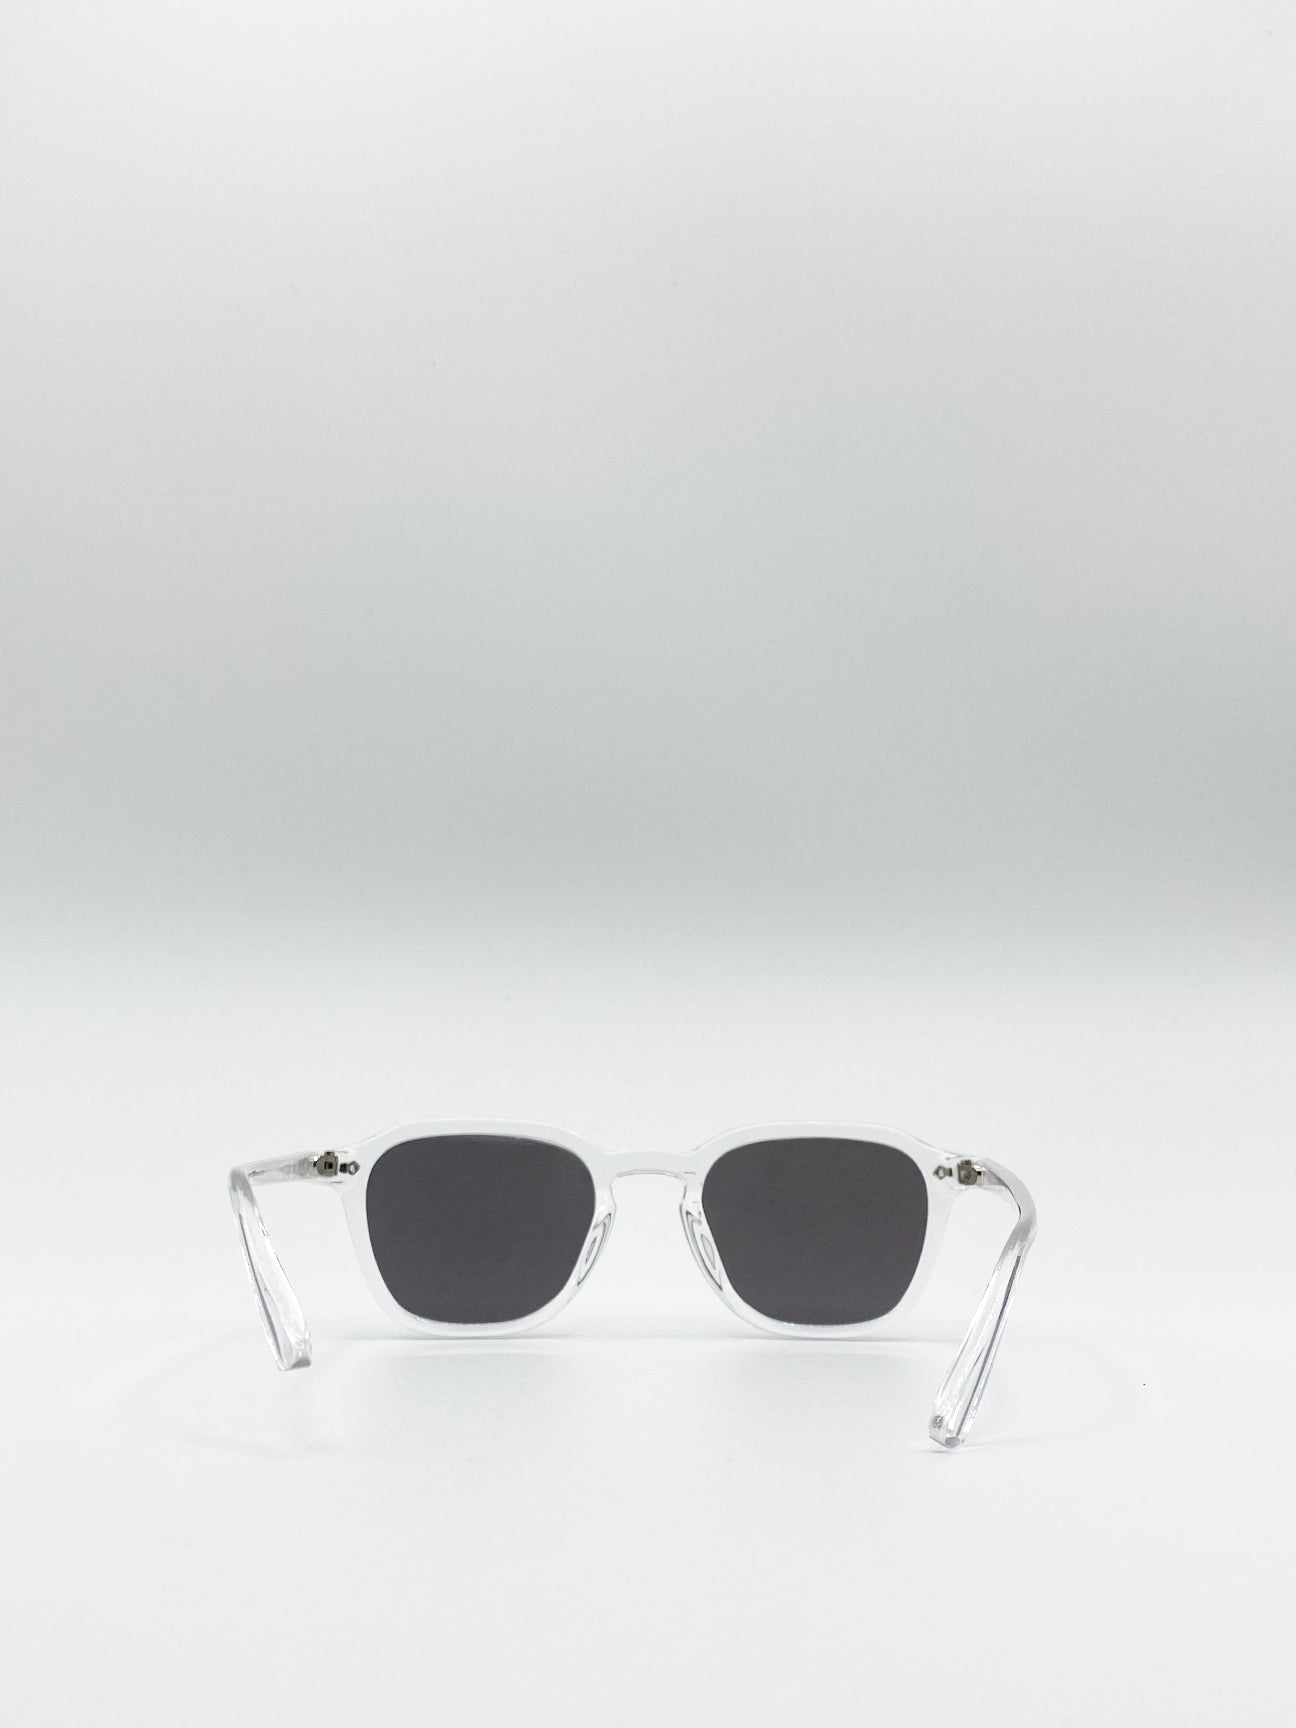 Clear Frame Classic Preppy Sunglasses With Key Hole Nosebridge